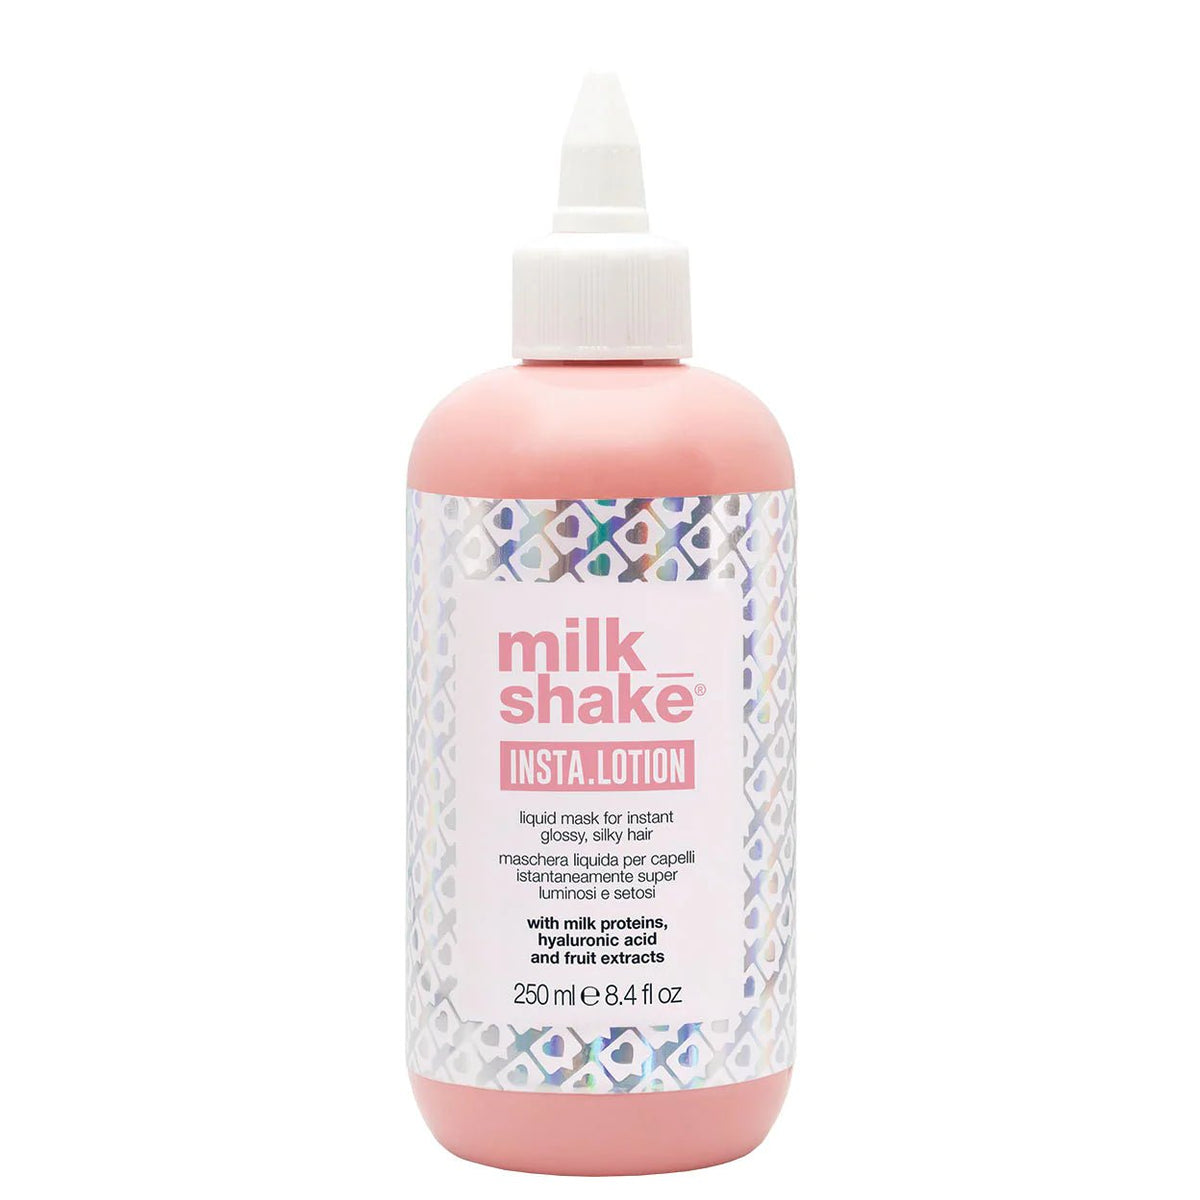 milk_shake insta.lotion - Blend Box